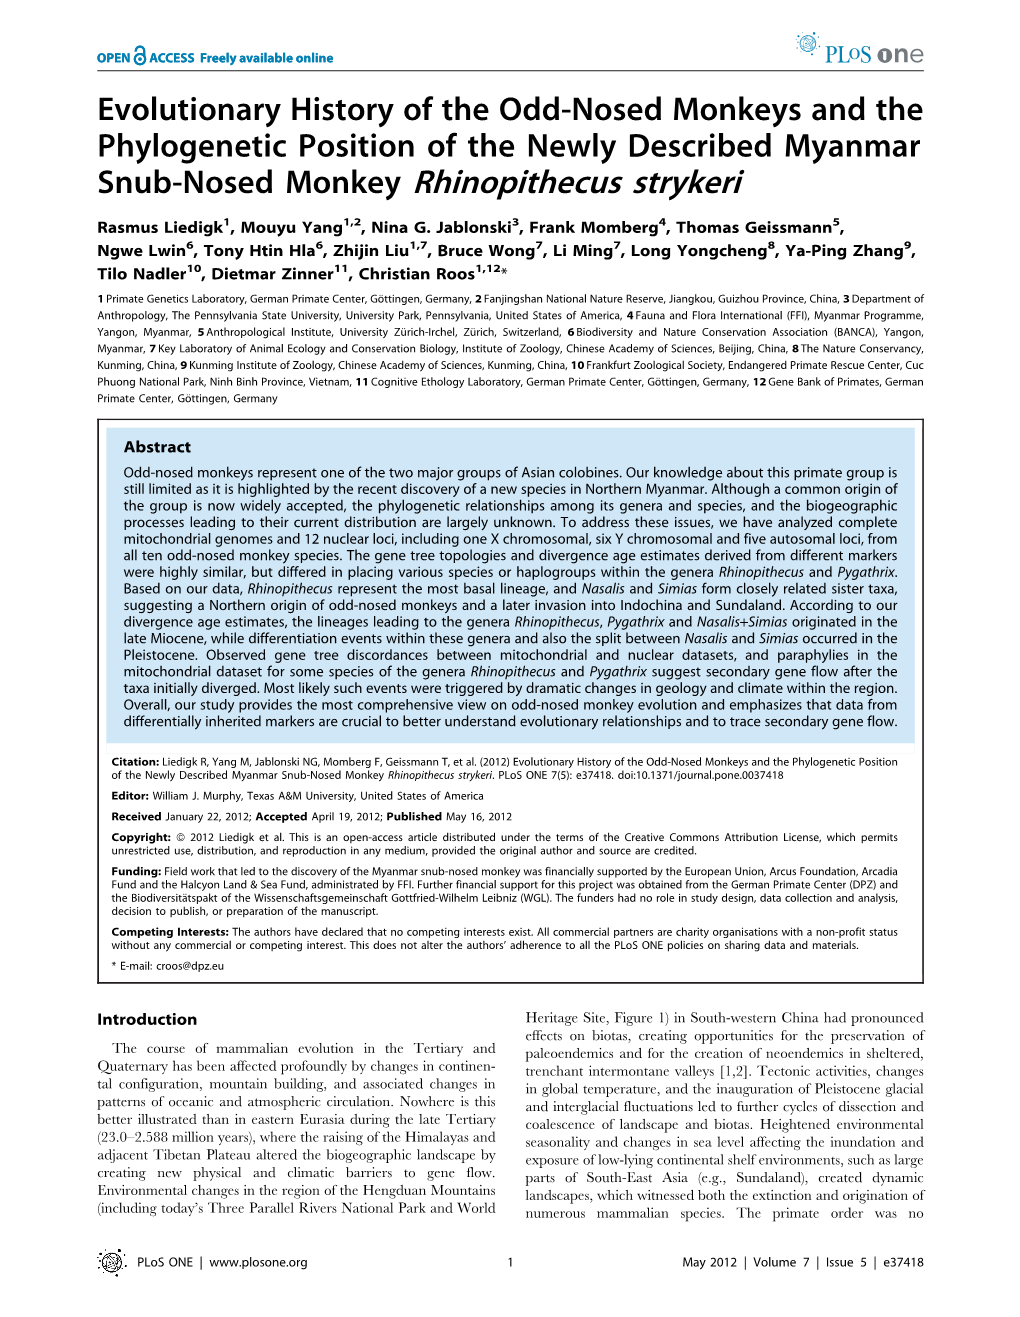 Snub-Nosed Monkey Rhinopithecus Strykeri